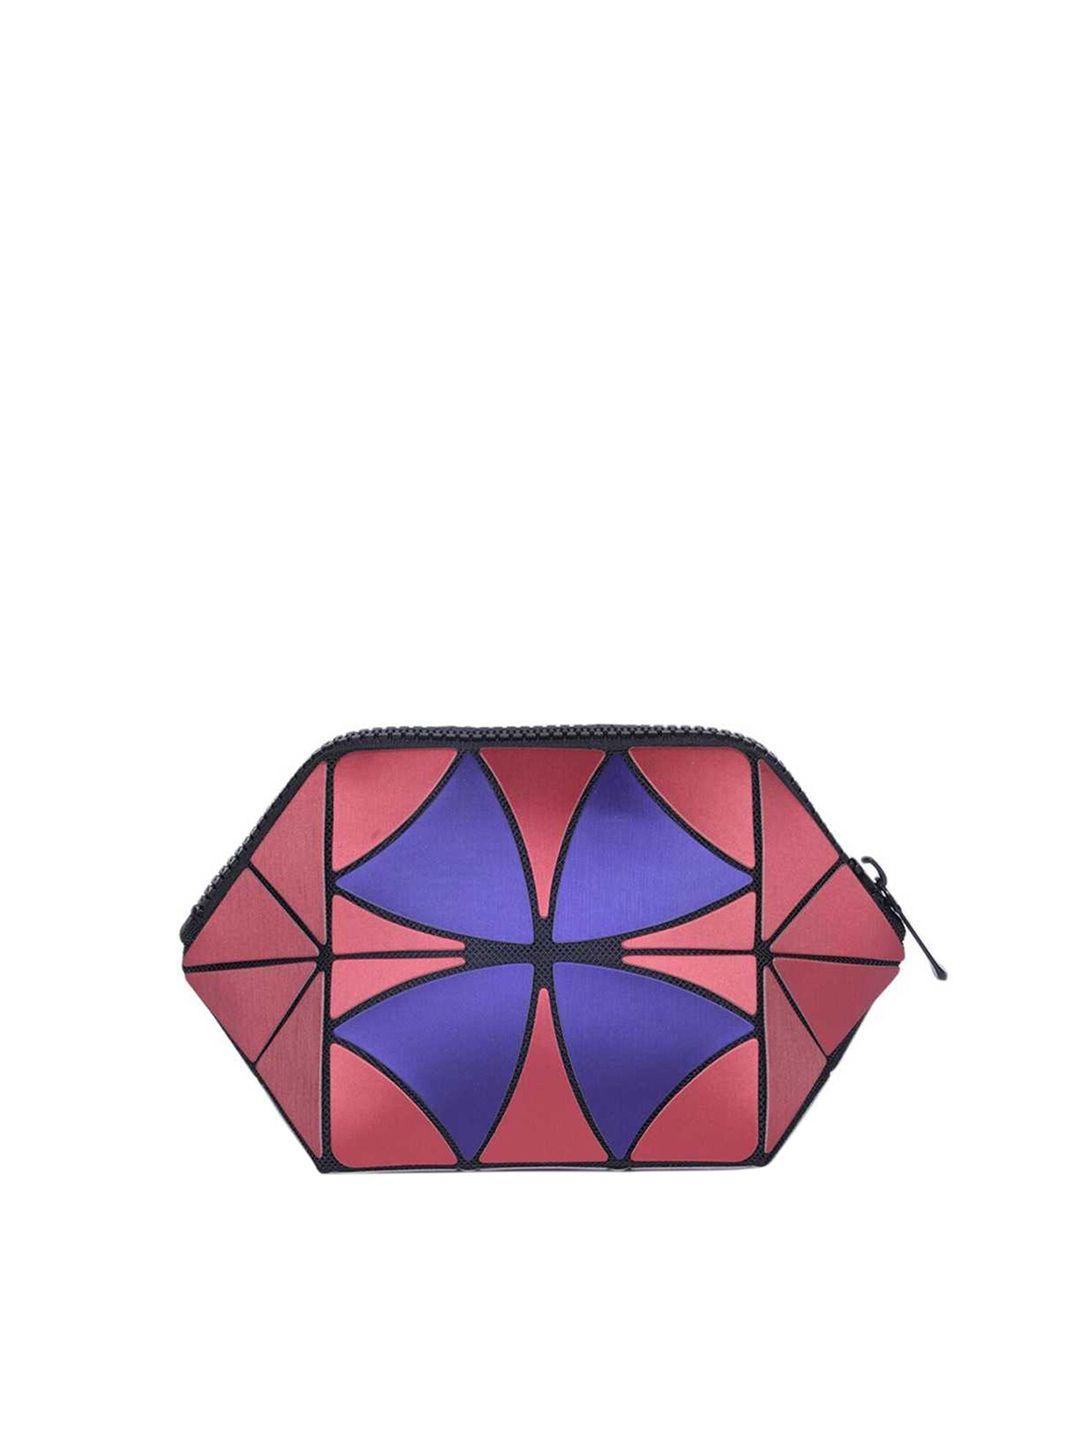 baomi geometric cosmetic pouch range orange + purple color soft one size handbag